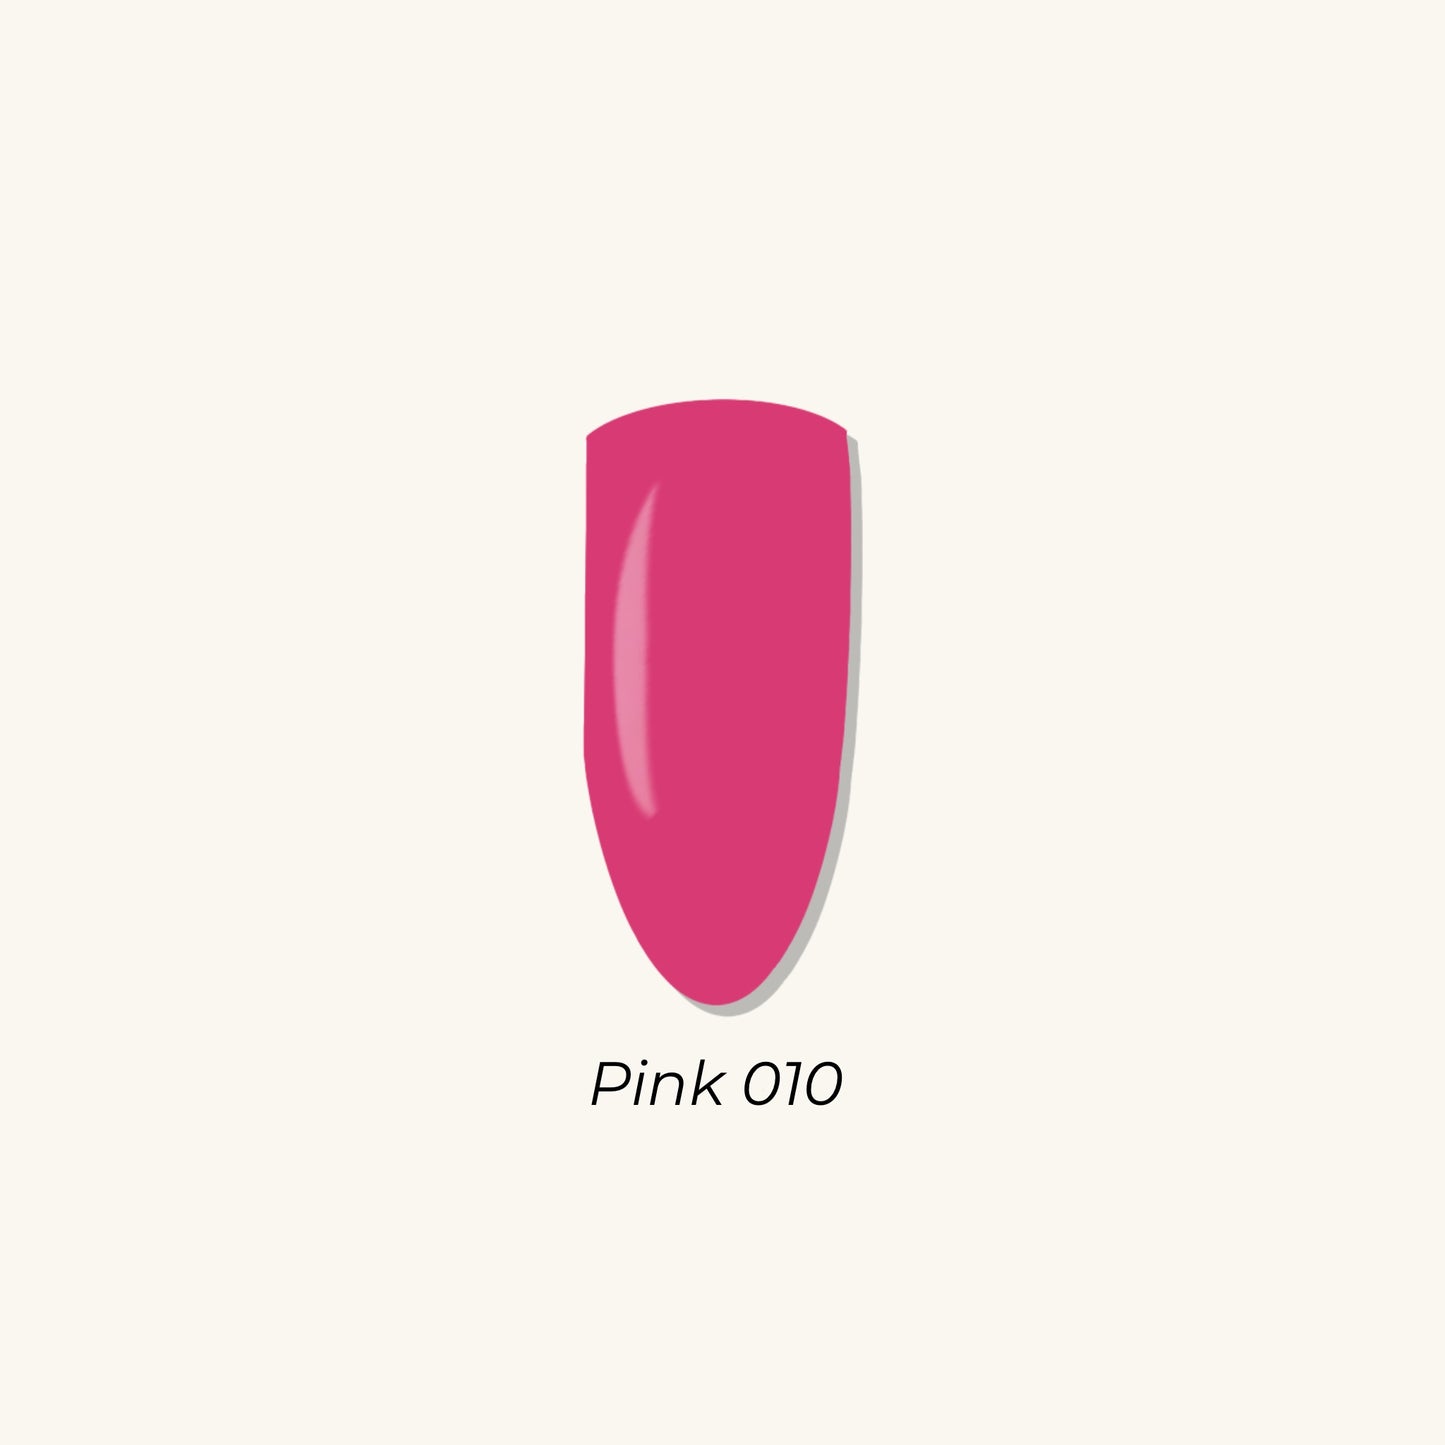 Pink 010